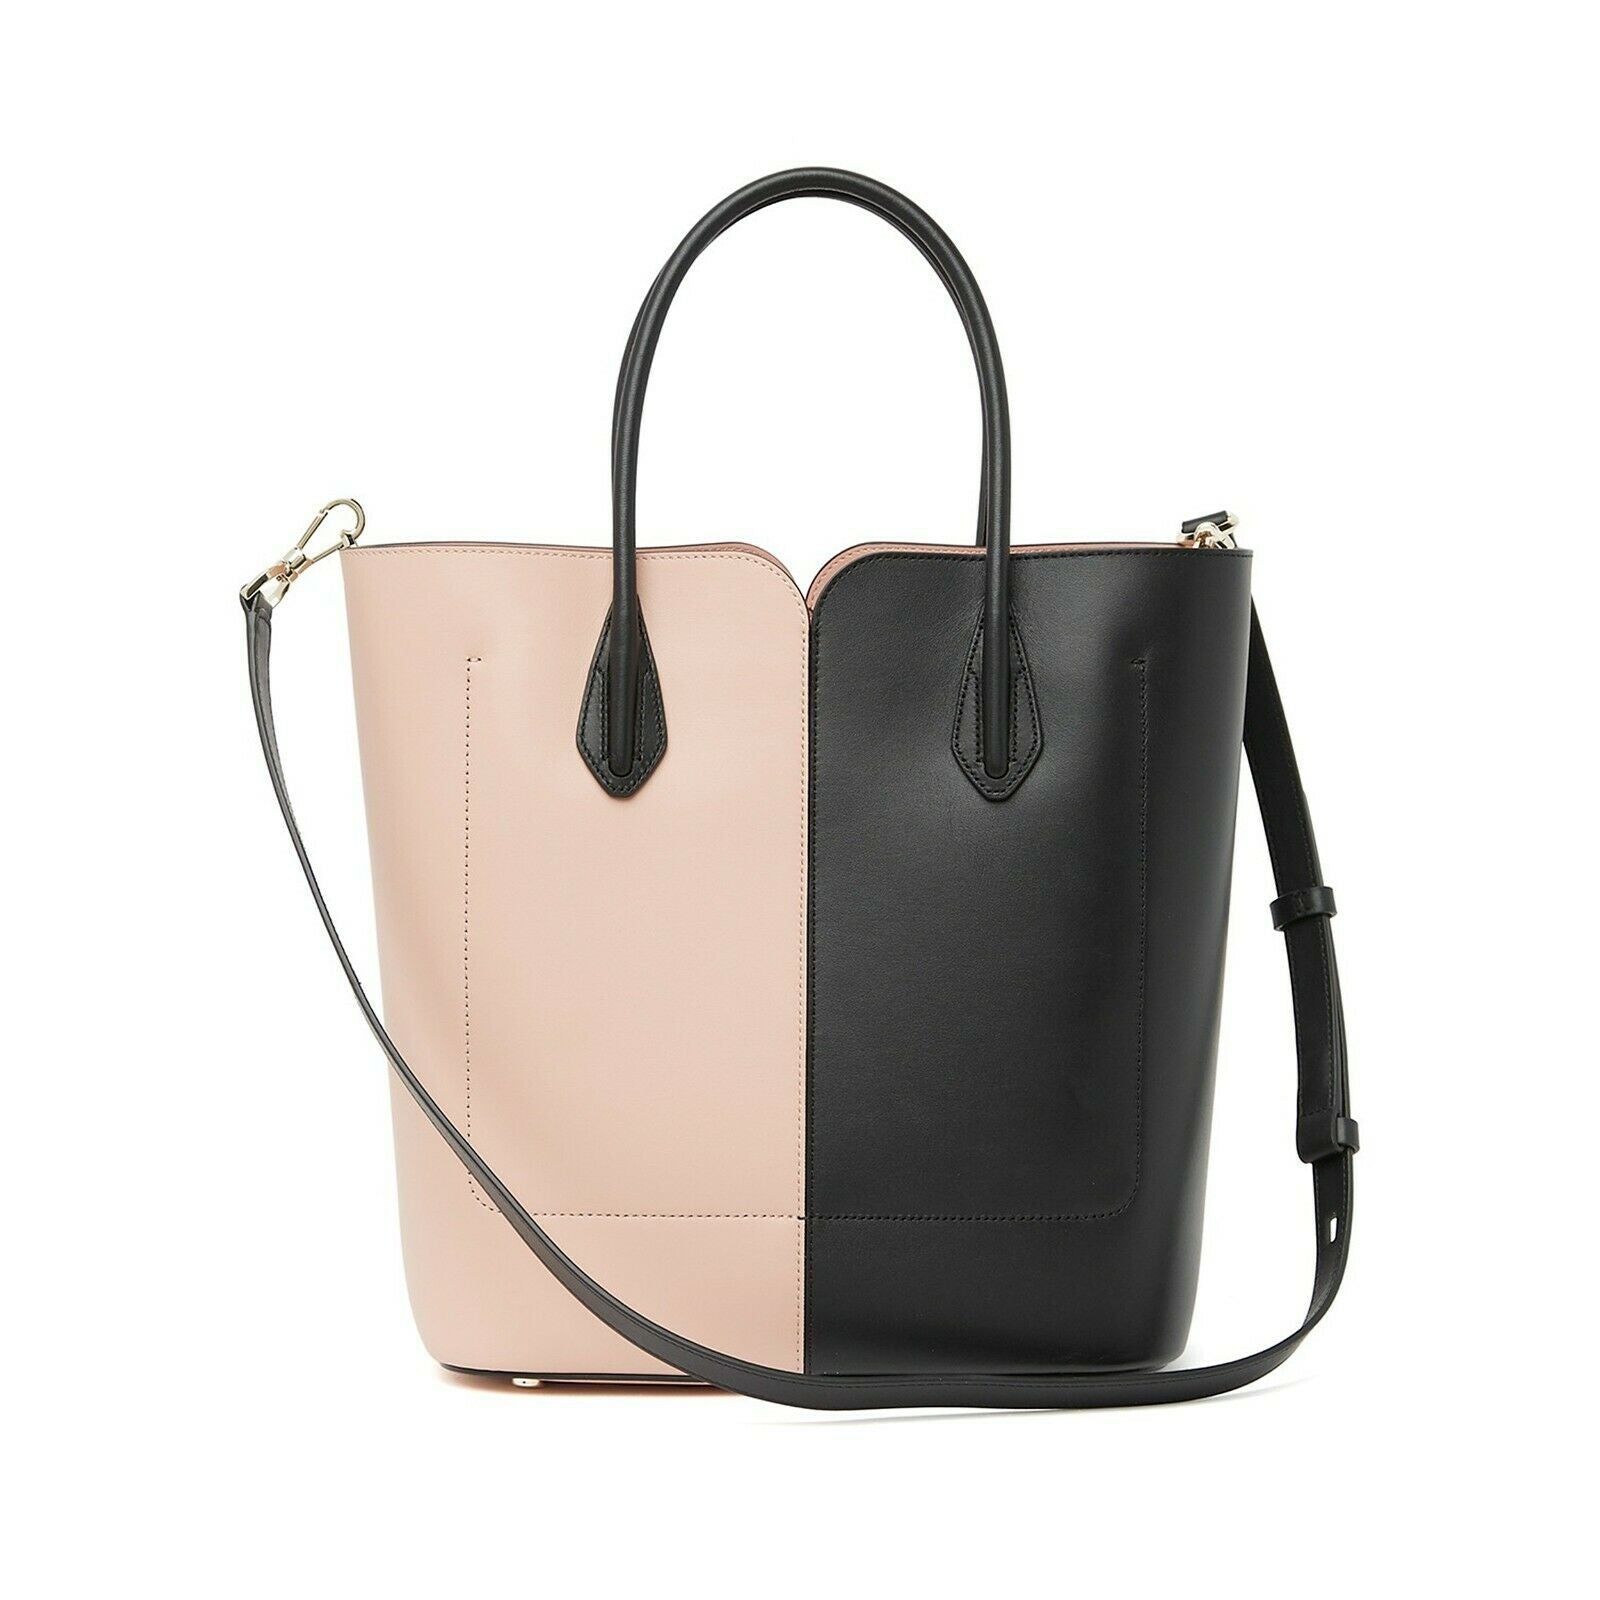 Kate Spade Black Leather Large Tote Bag/purse